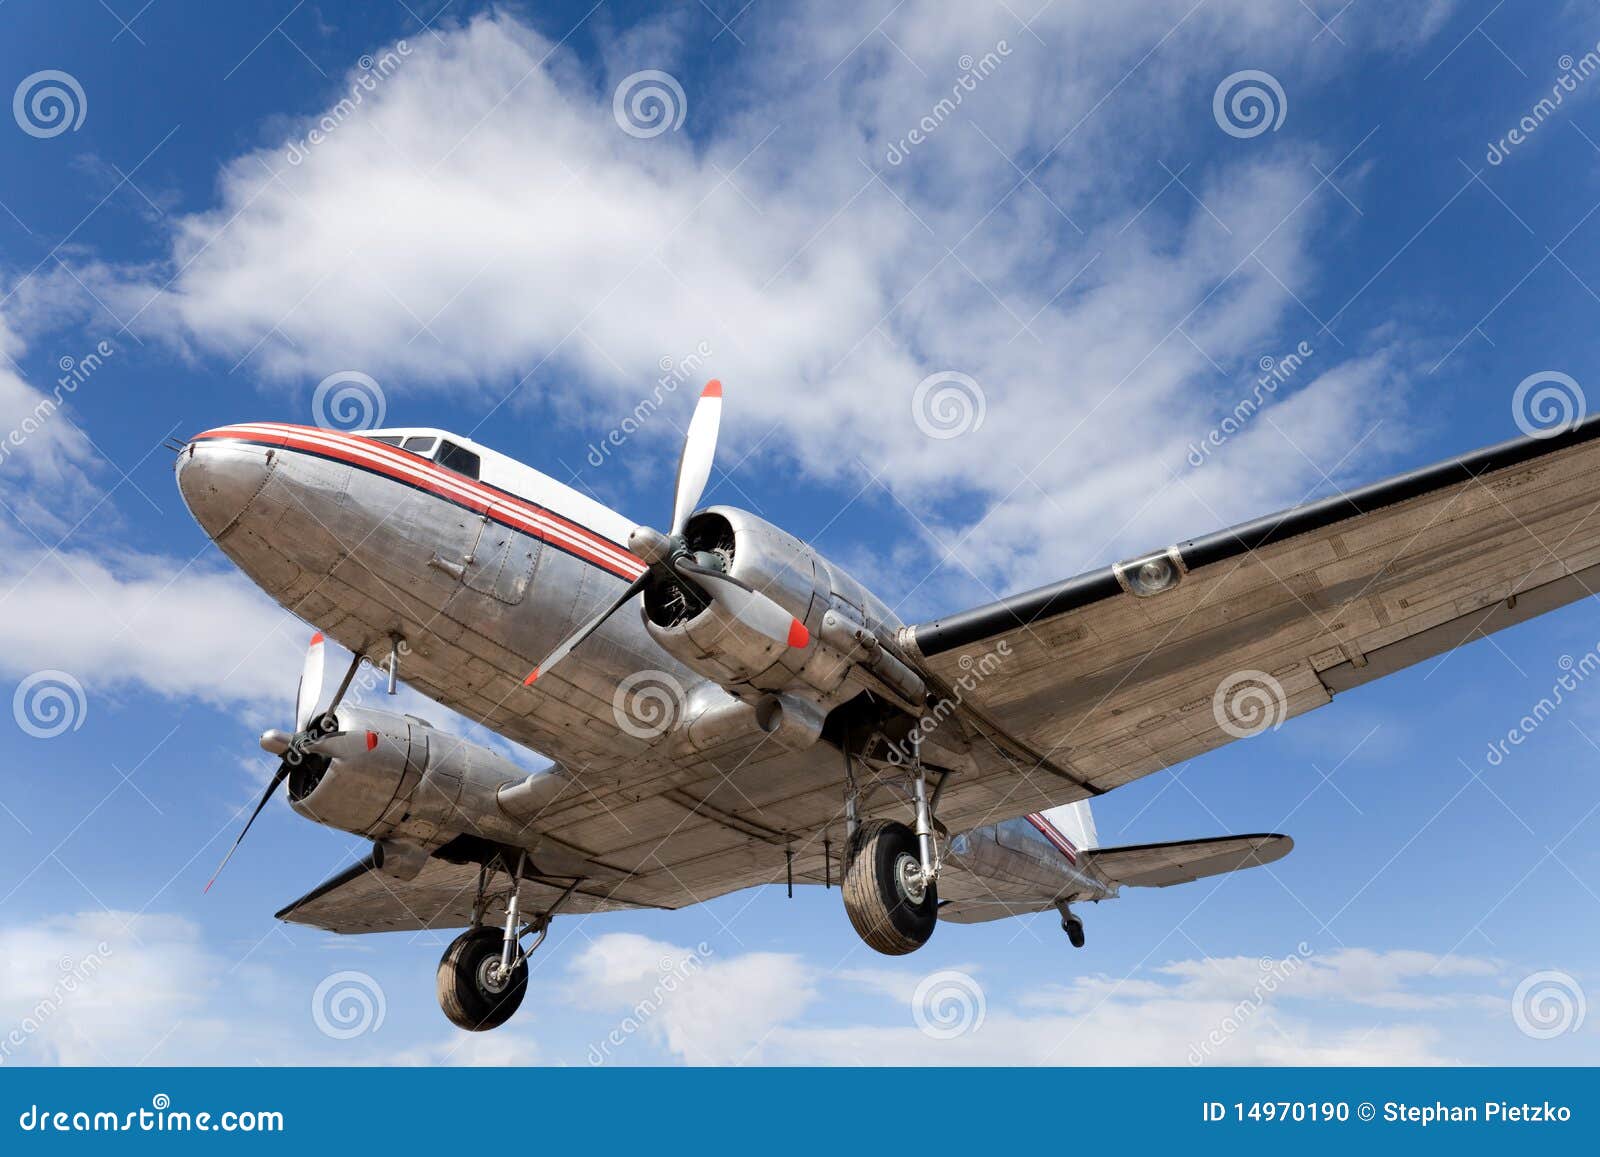 restored vintage airplane dc-3